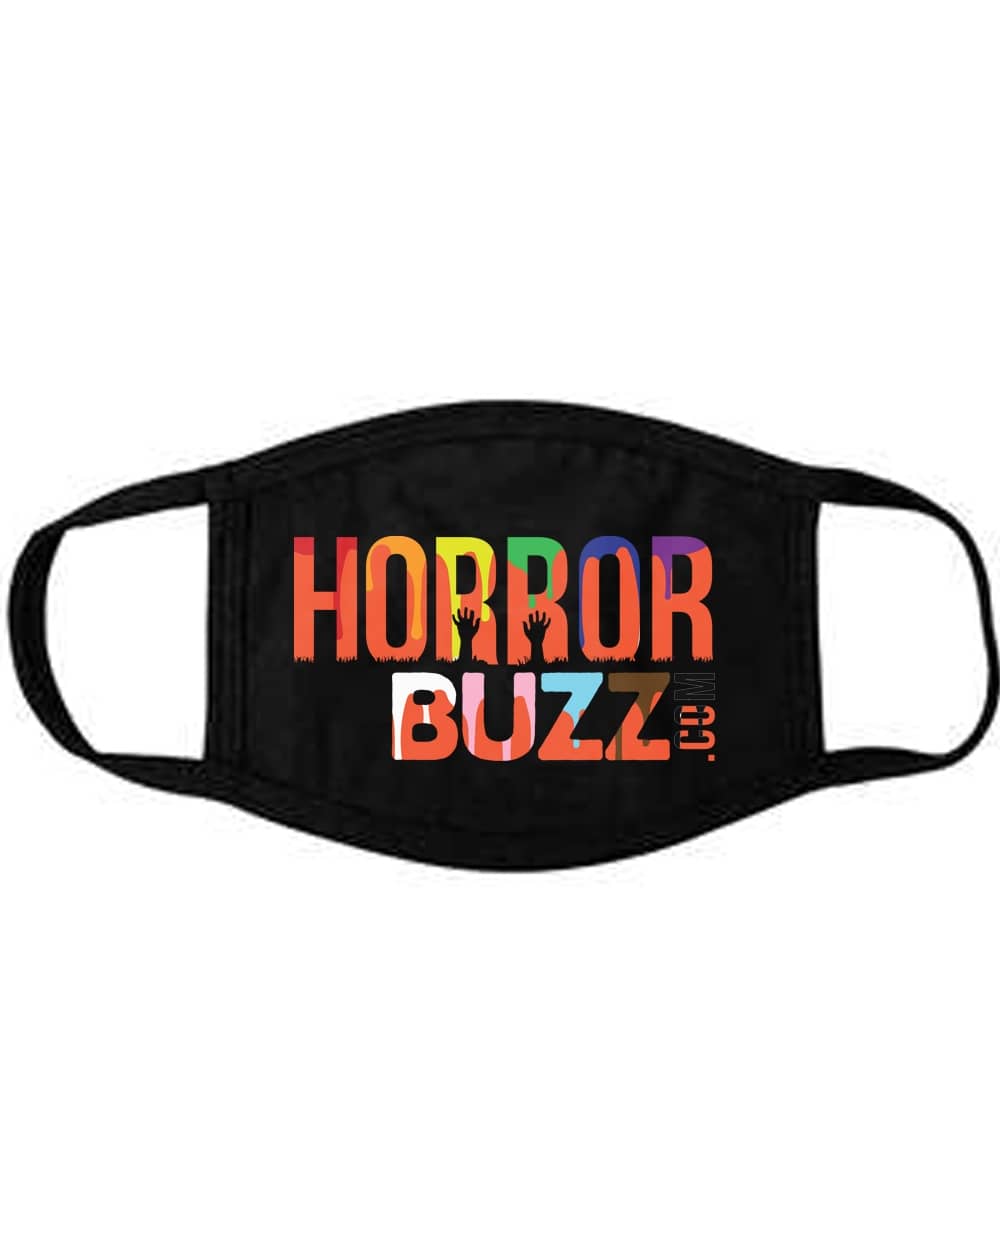 HorrorBuzz Pride Face Mask